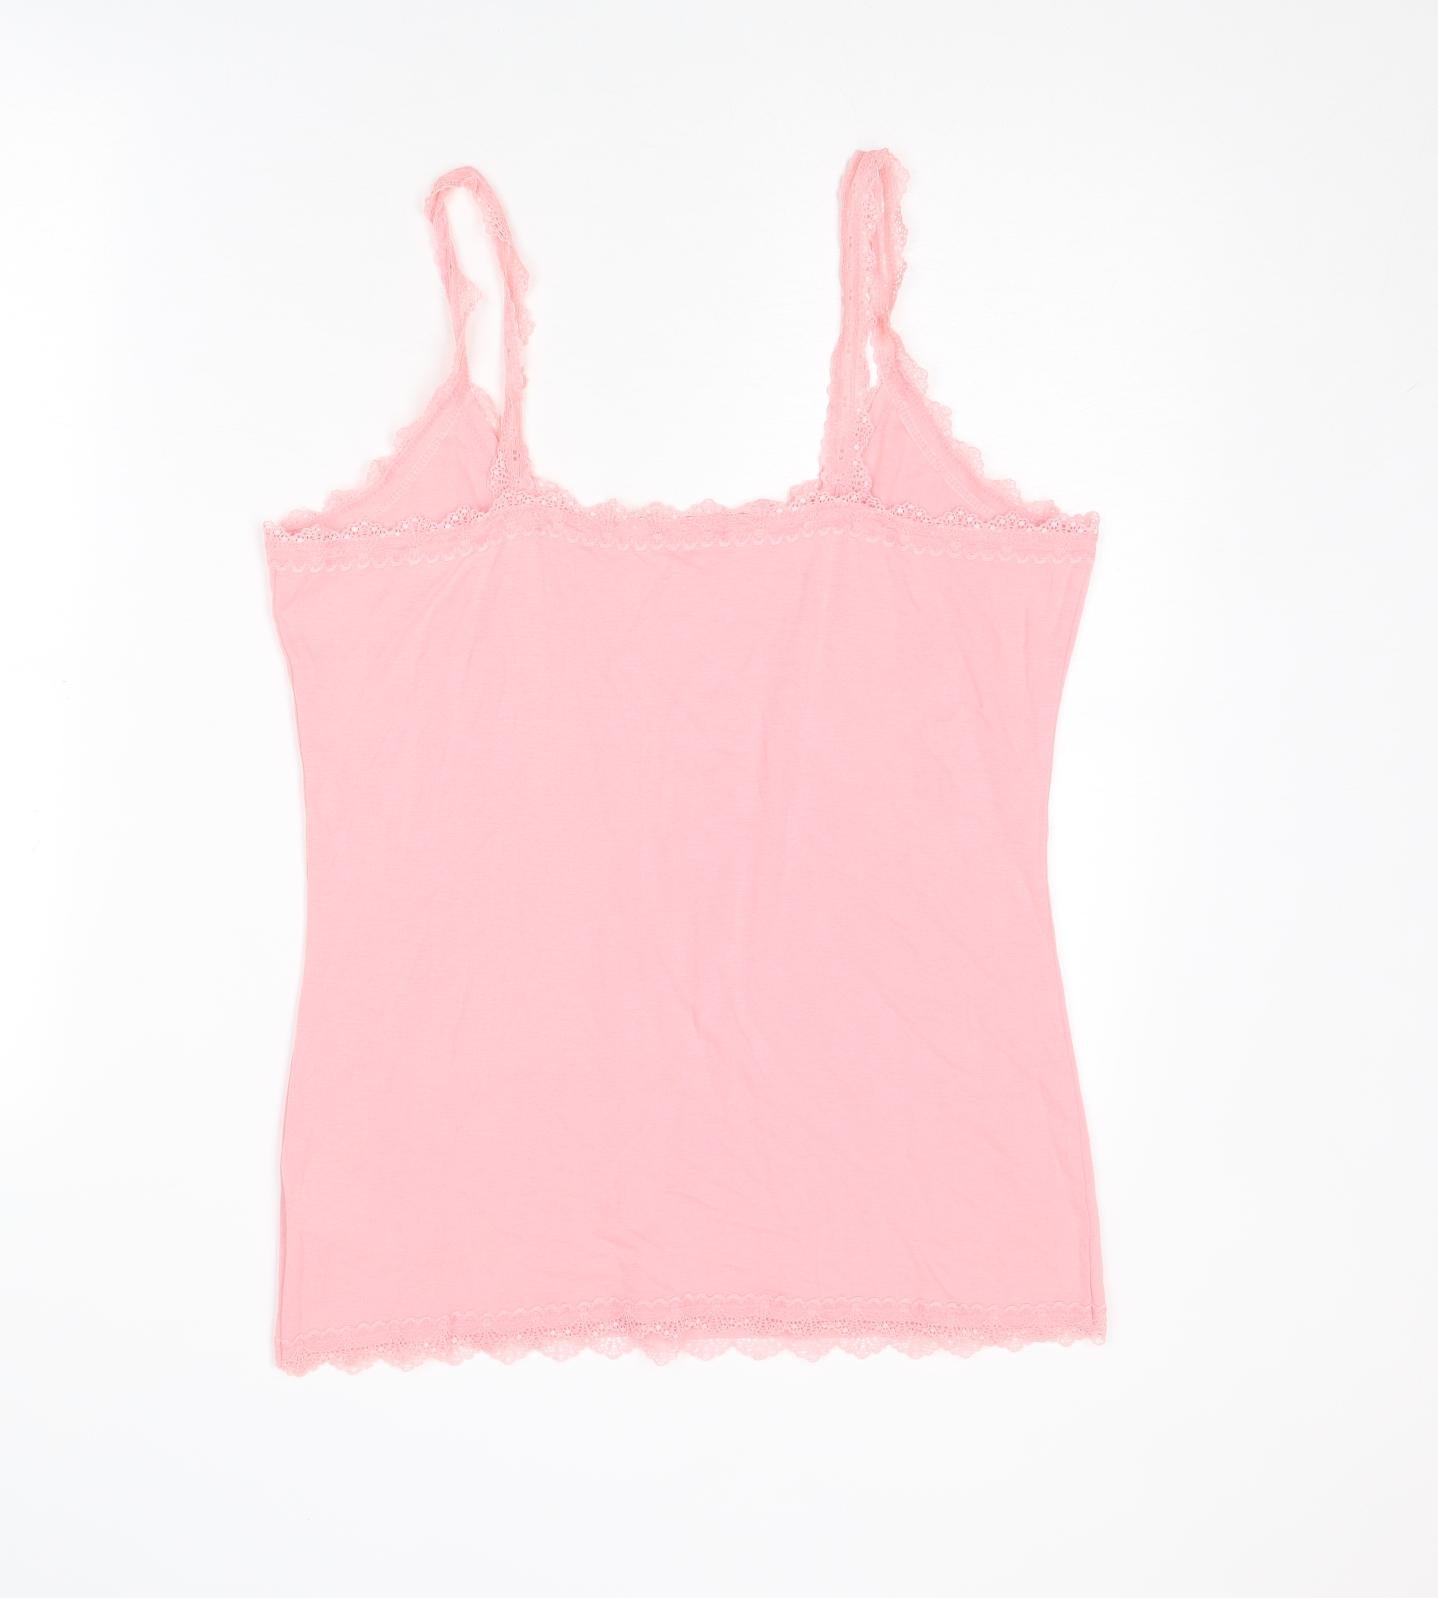 Indigo Womens Pink Cotton Camisole Tank Size 18 Scoop Neck - Lace Trim